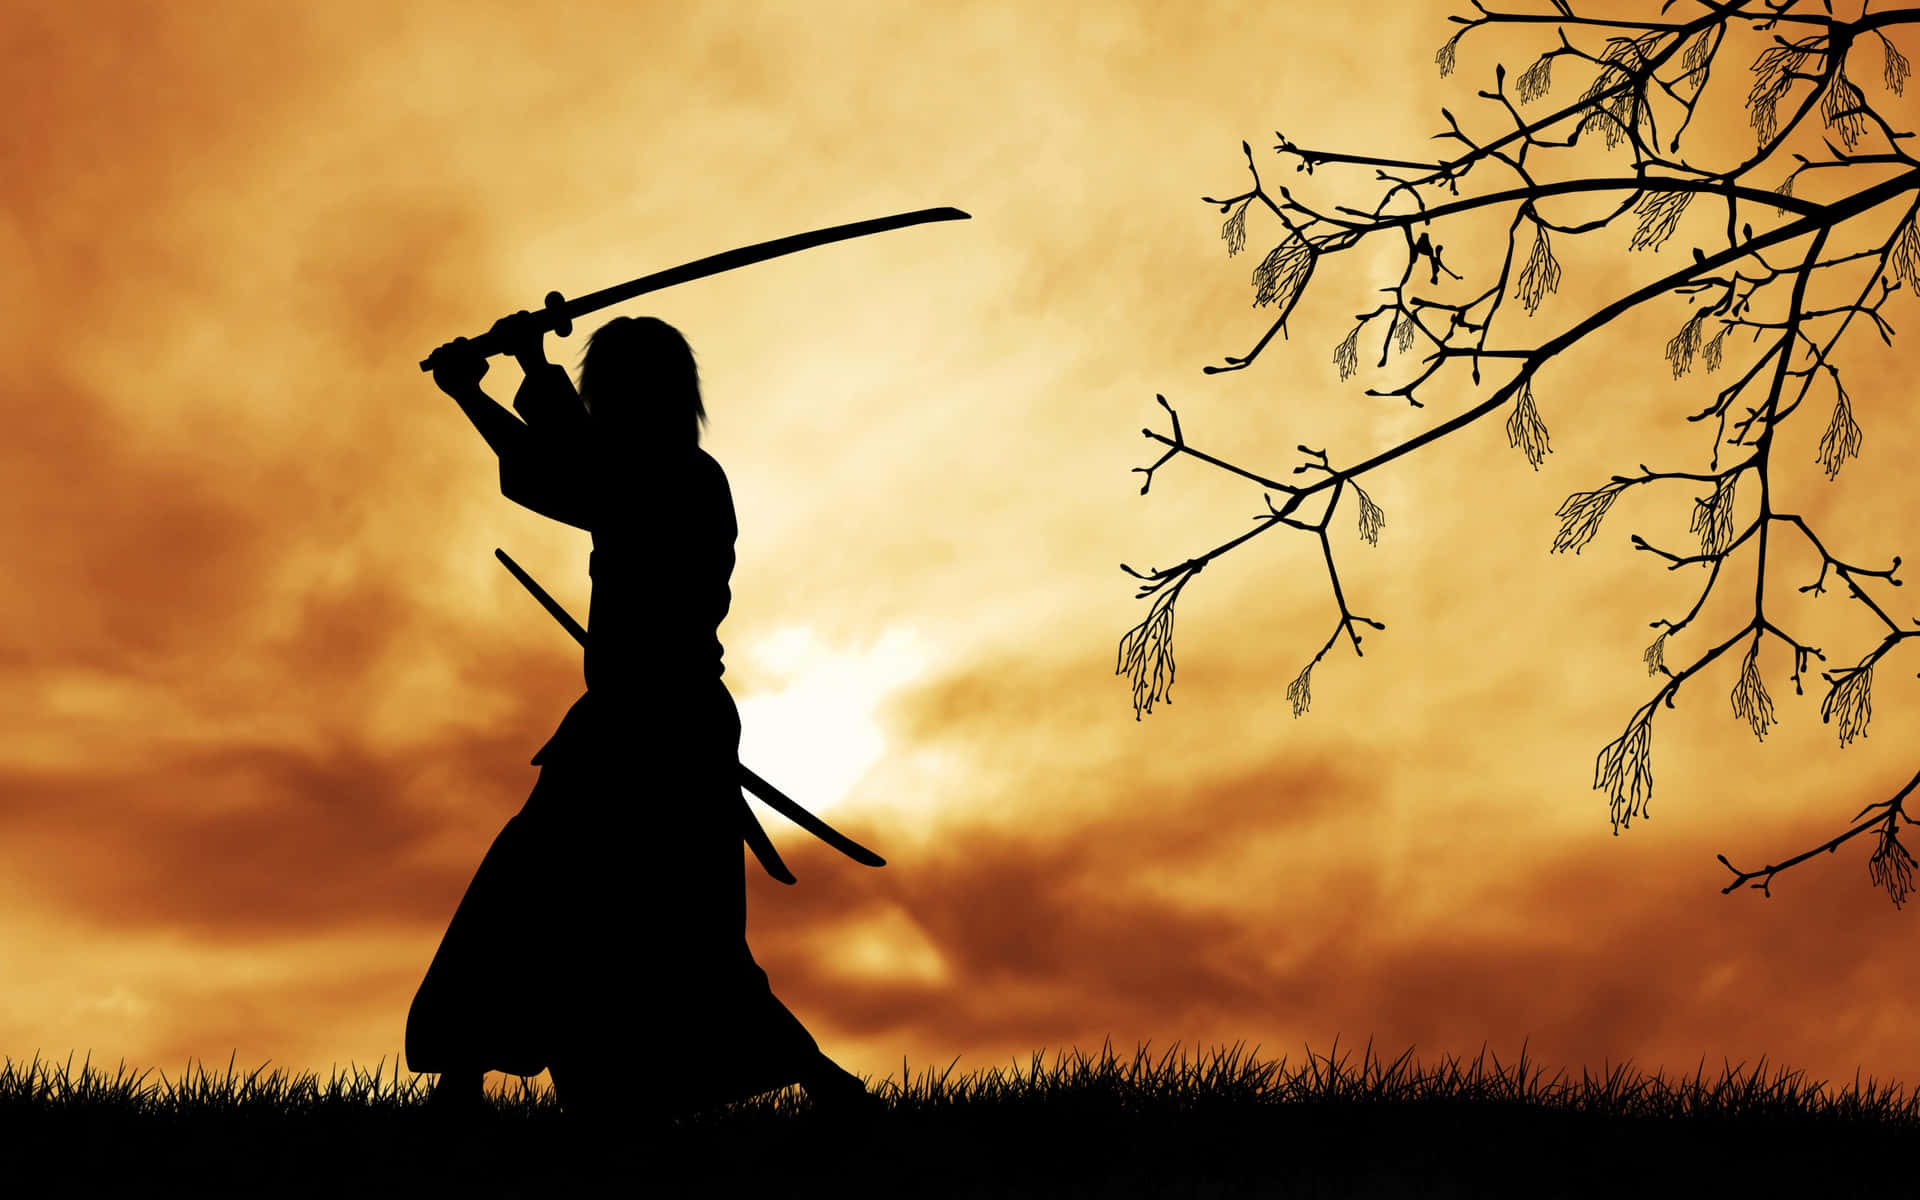 Kenshin Himura, protagonist of the samurai series, Samurai X.